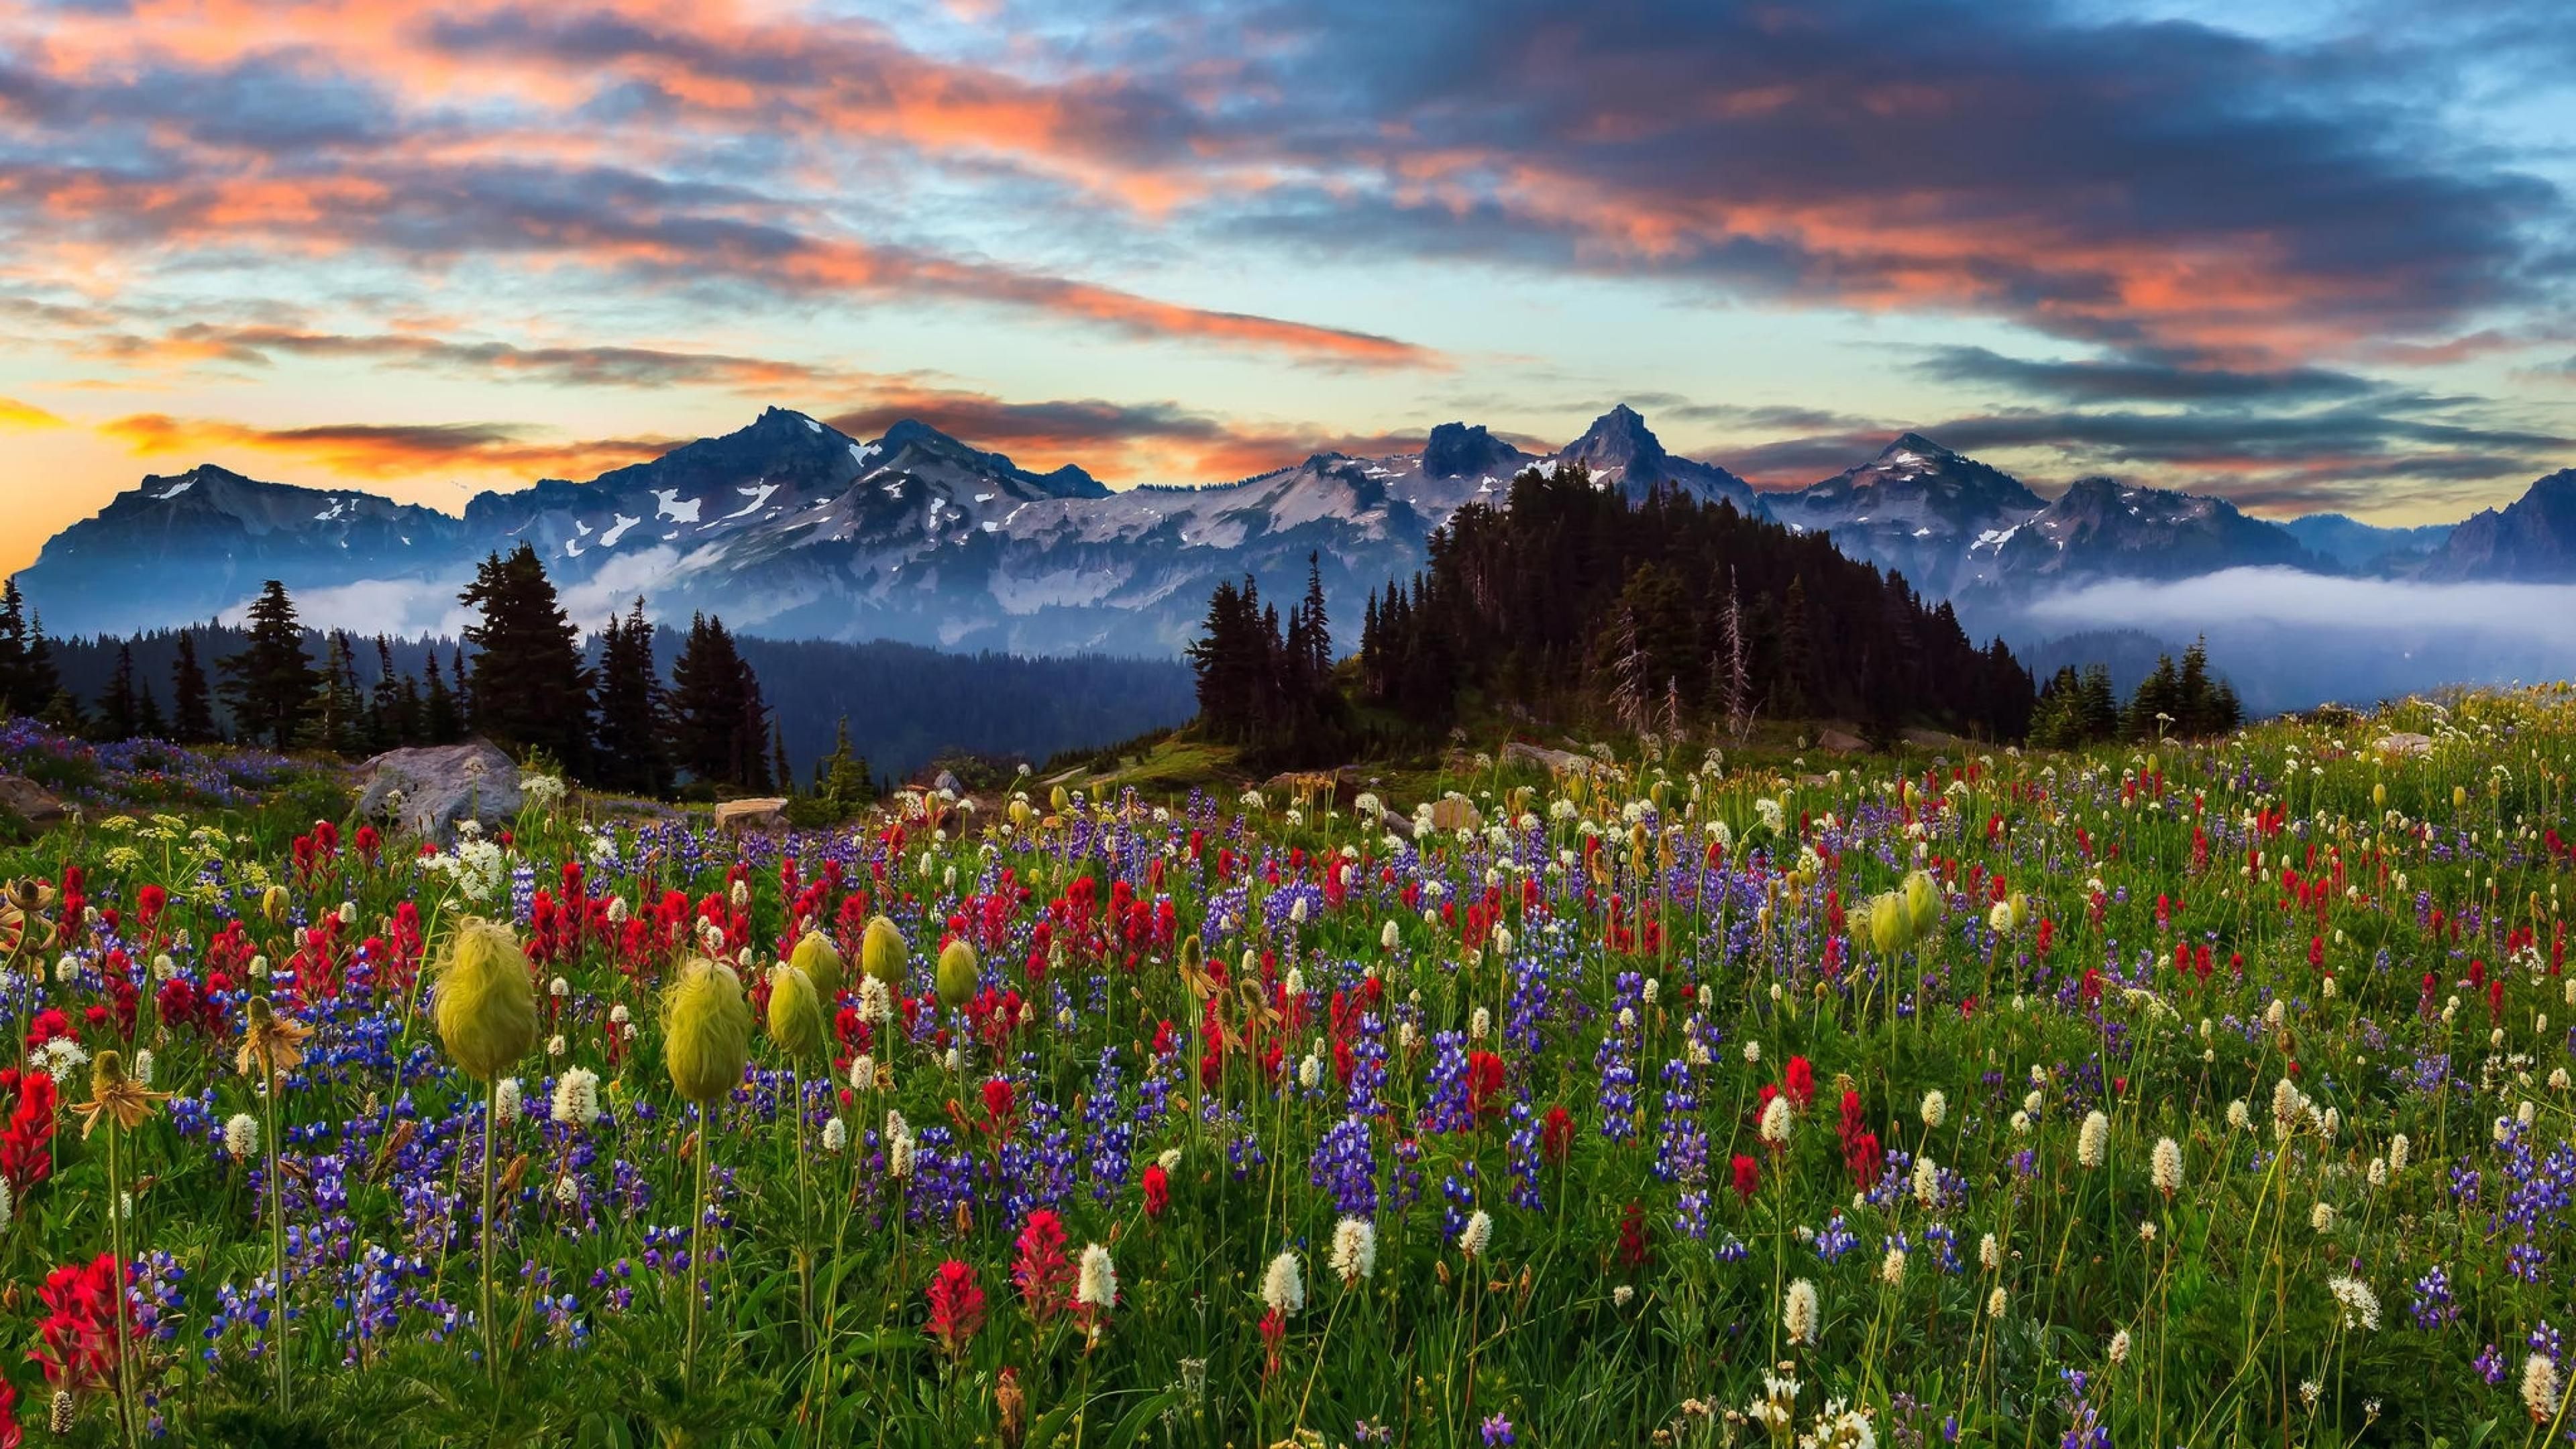 Download Mount Rainier National Park Wallpaper for desktop, mobile